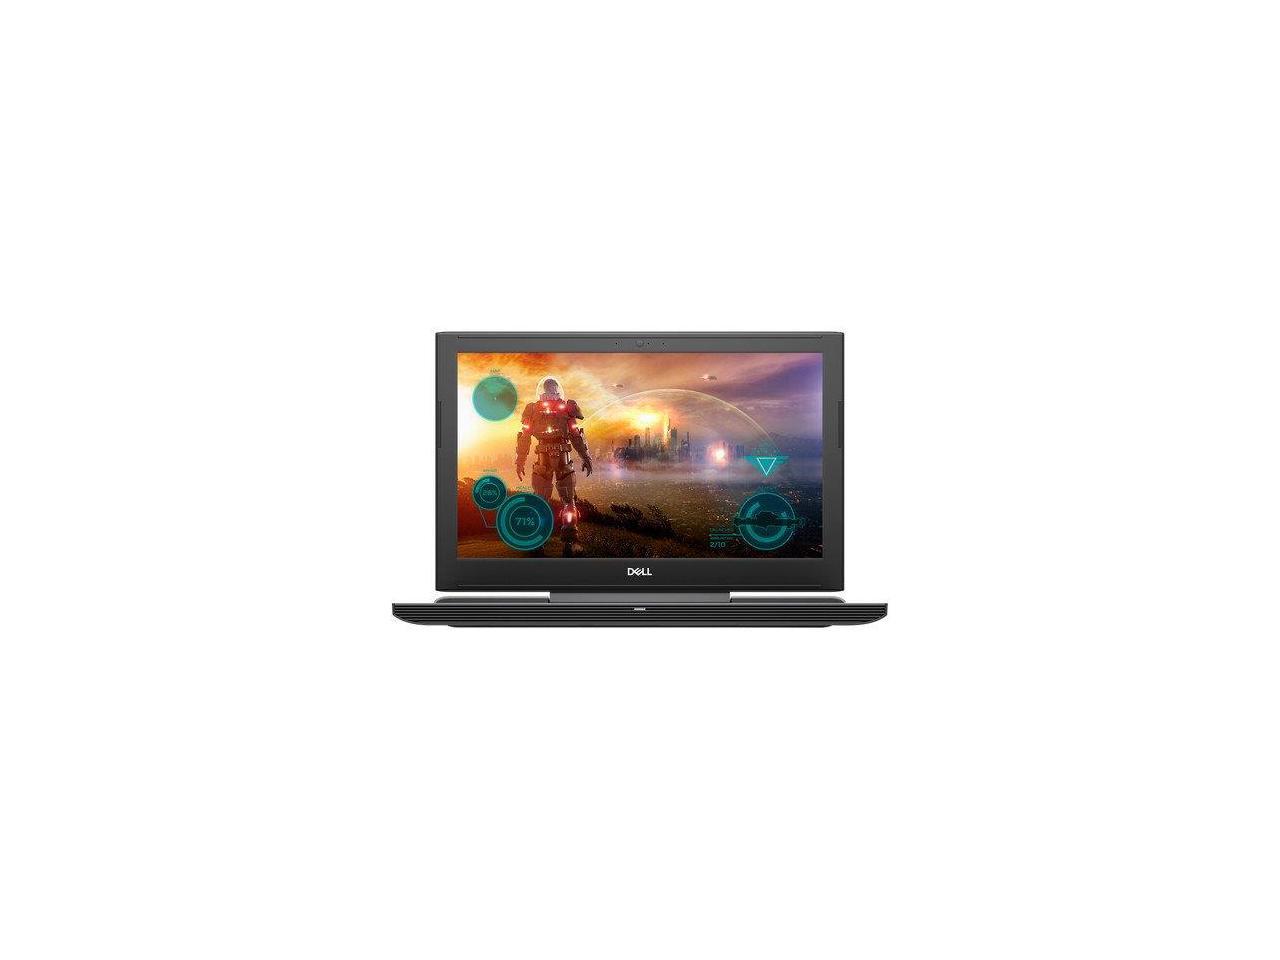 Dell Inspiron 7000 15.6" IPS FHD Gaming Laptop | VR Ready | Intel Quad Core i5-7300HQ | 8GB RAM 256GB SSD 2TB HDD | NVIDIA GeForce GTX 1060 6GB GDDR5 | Windows 10 Black